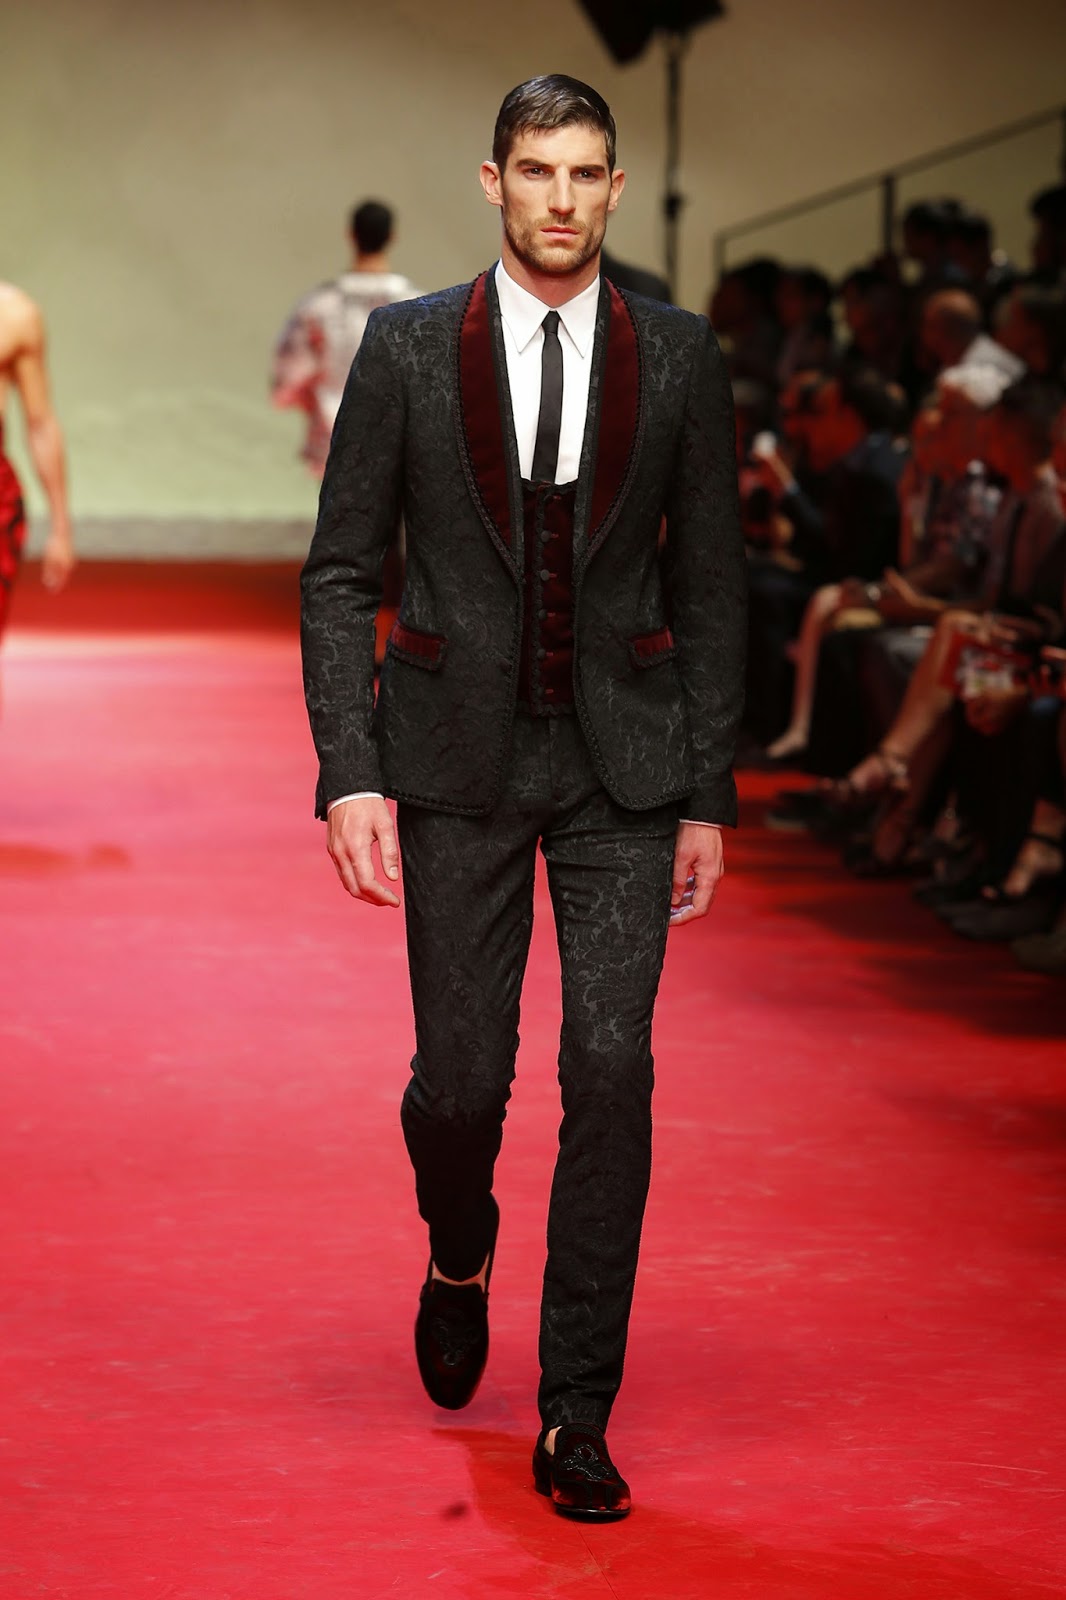 Fashion Runway | Dolce&Gabbana SS15 | COOL CHIC STYLE to dress italian